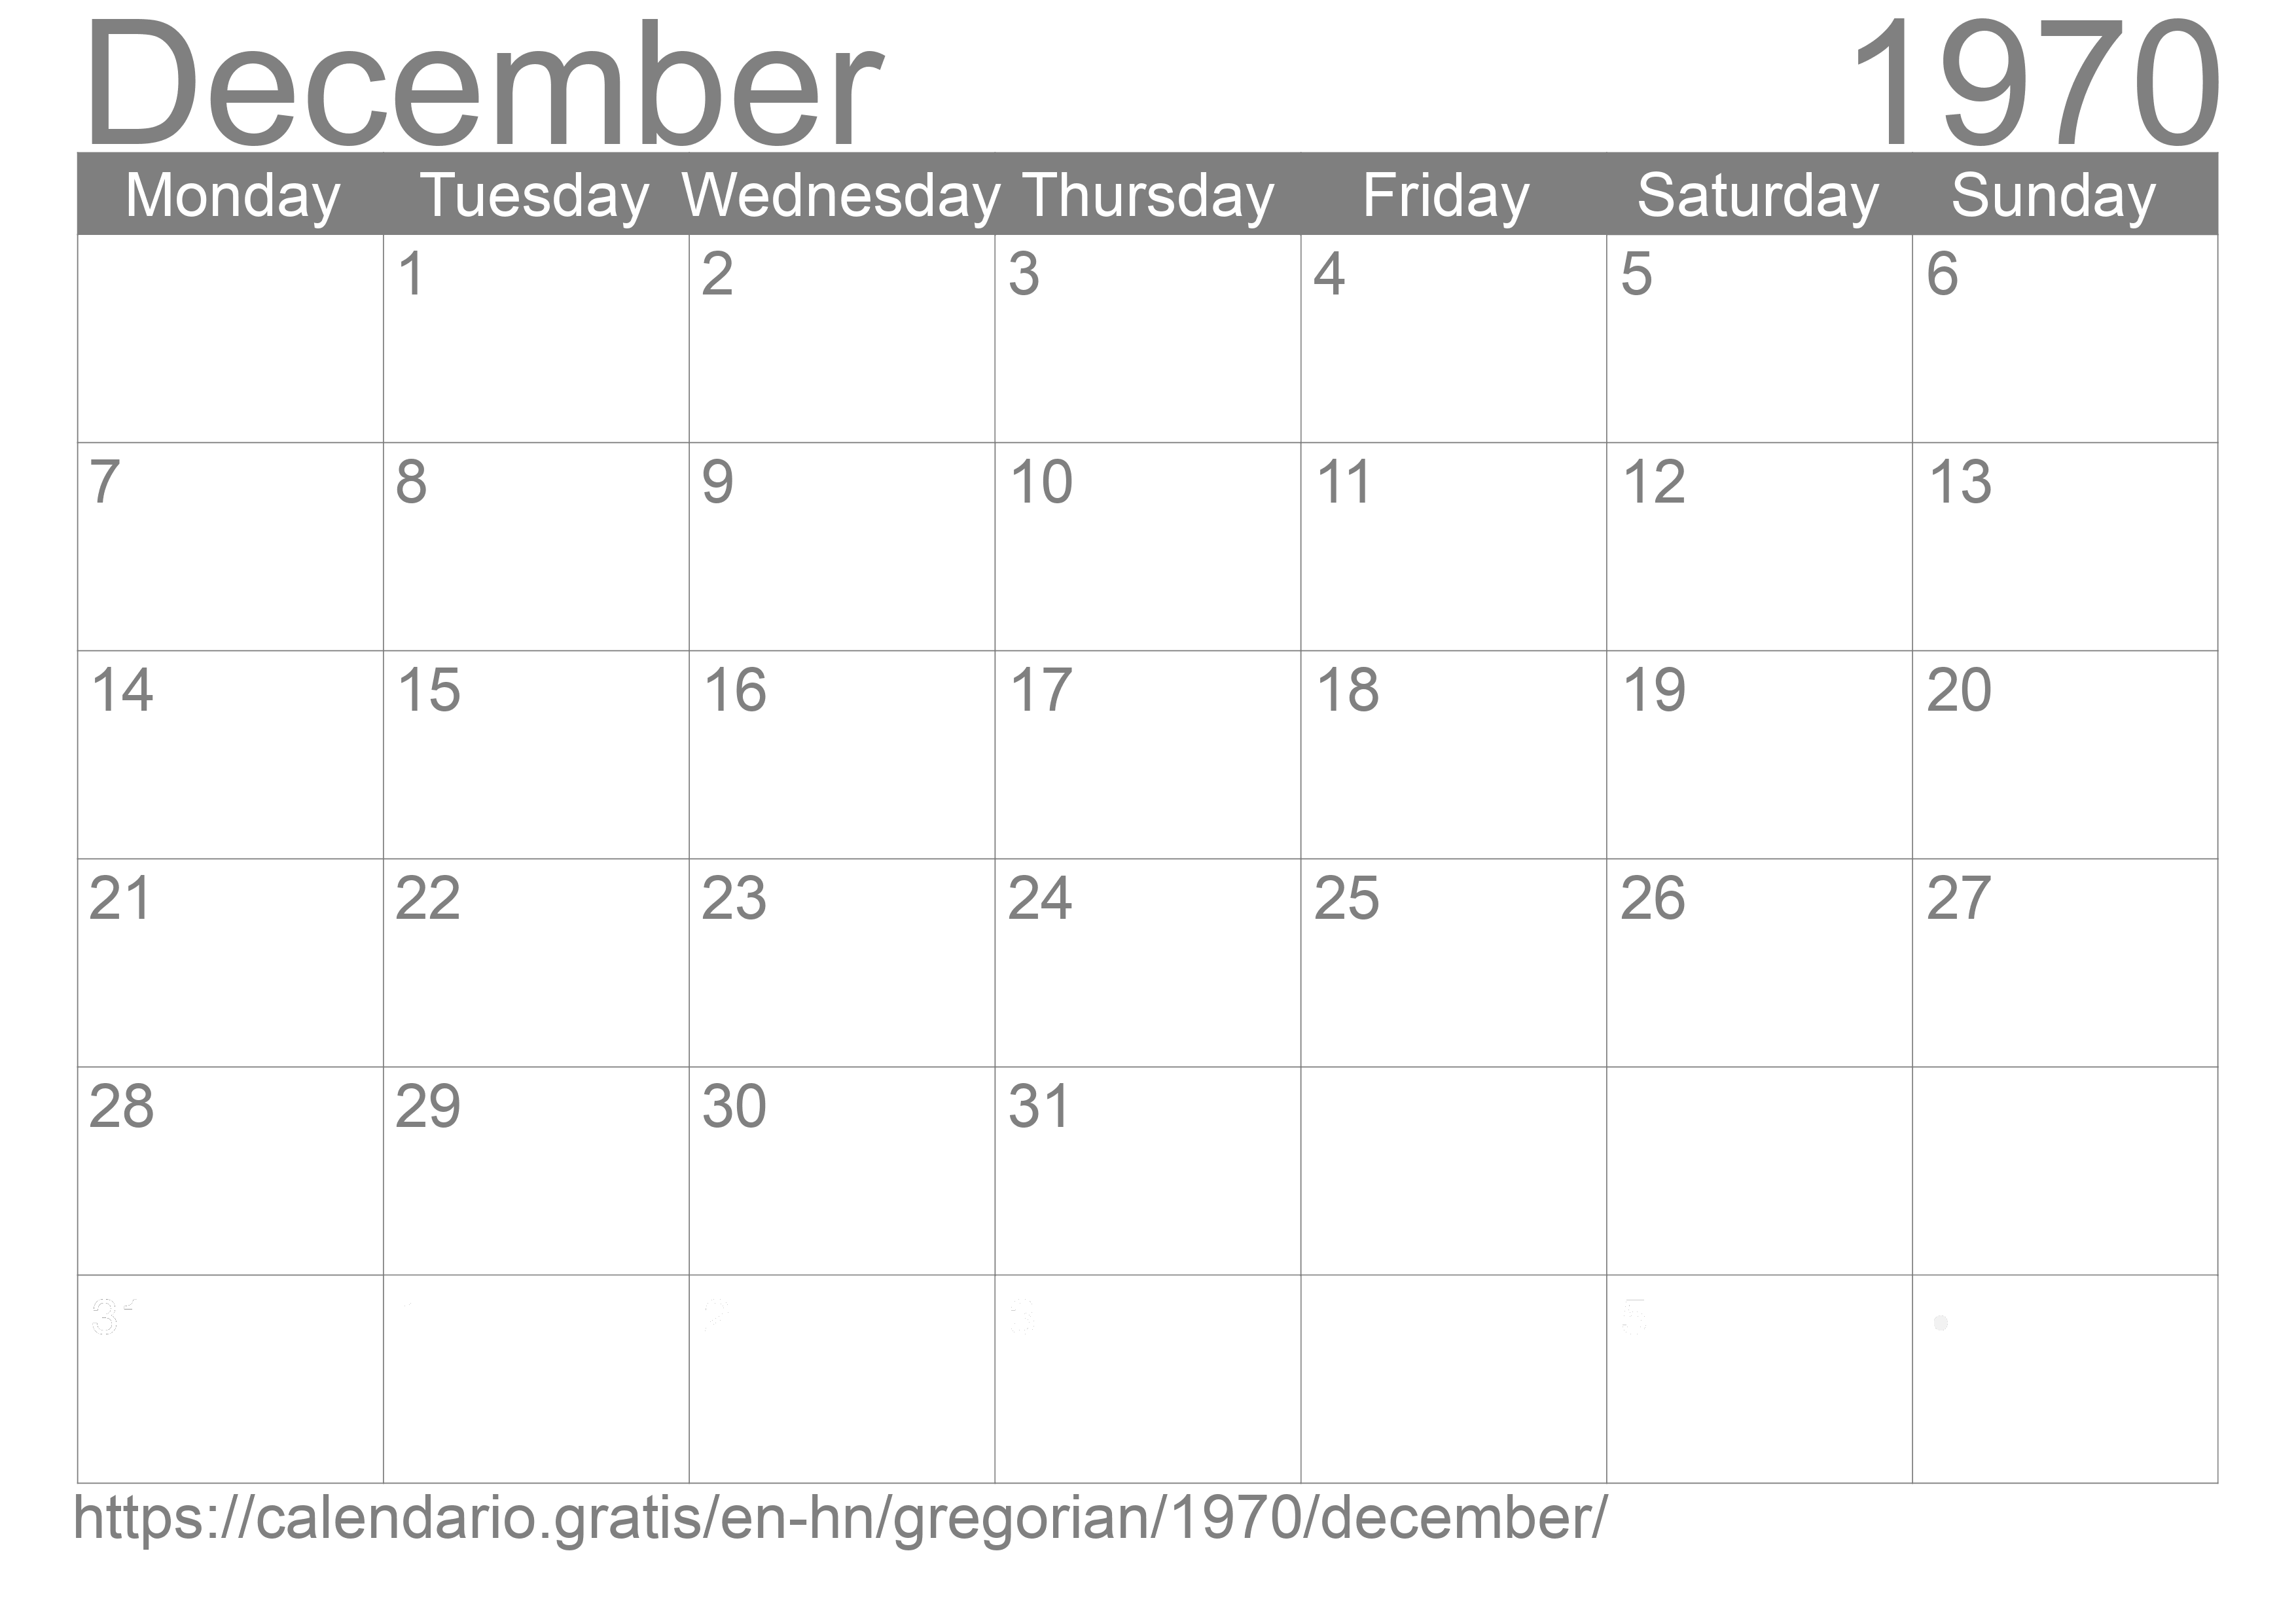 Calendar December 1970 to print